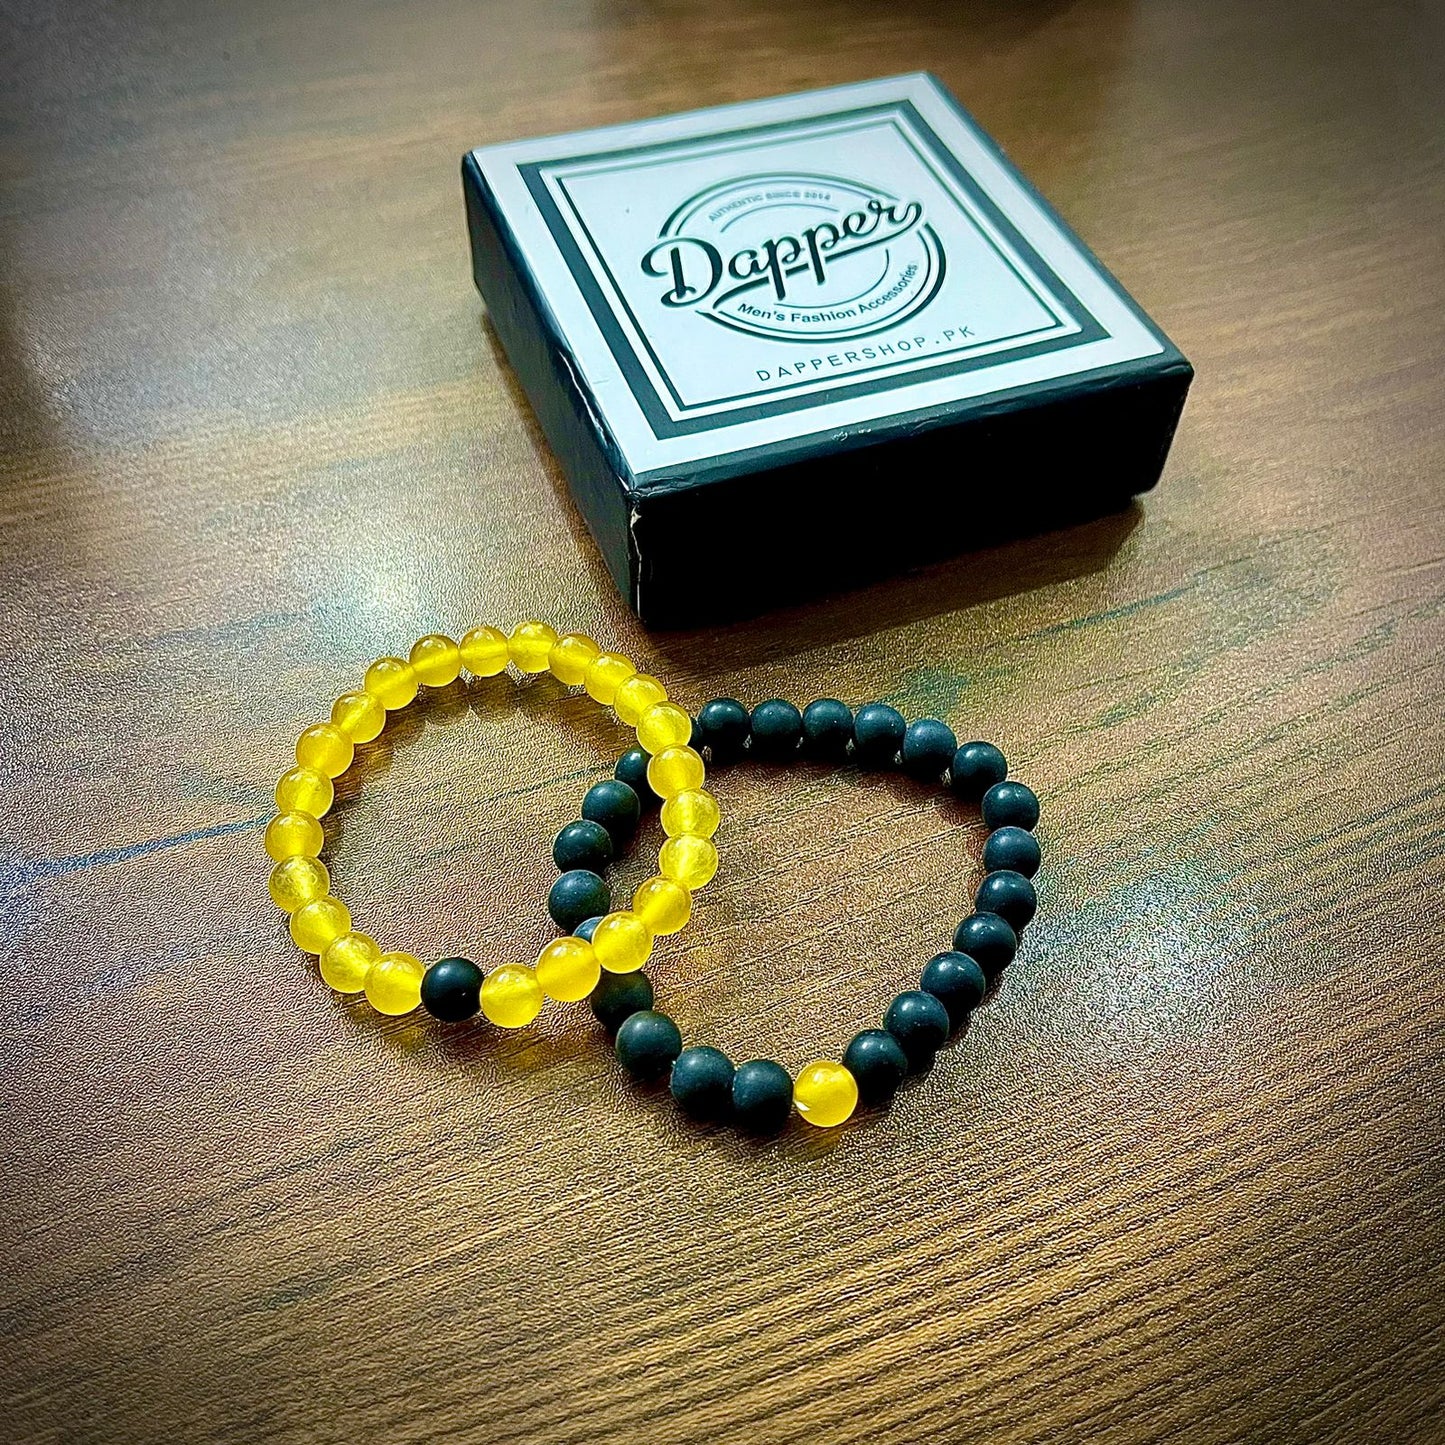 Matt Black & Yellow Agate Energy Stone Beads Distance Bracelet Set Couple Bracelet